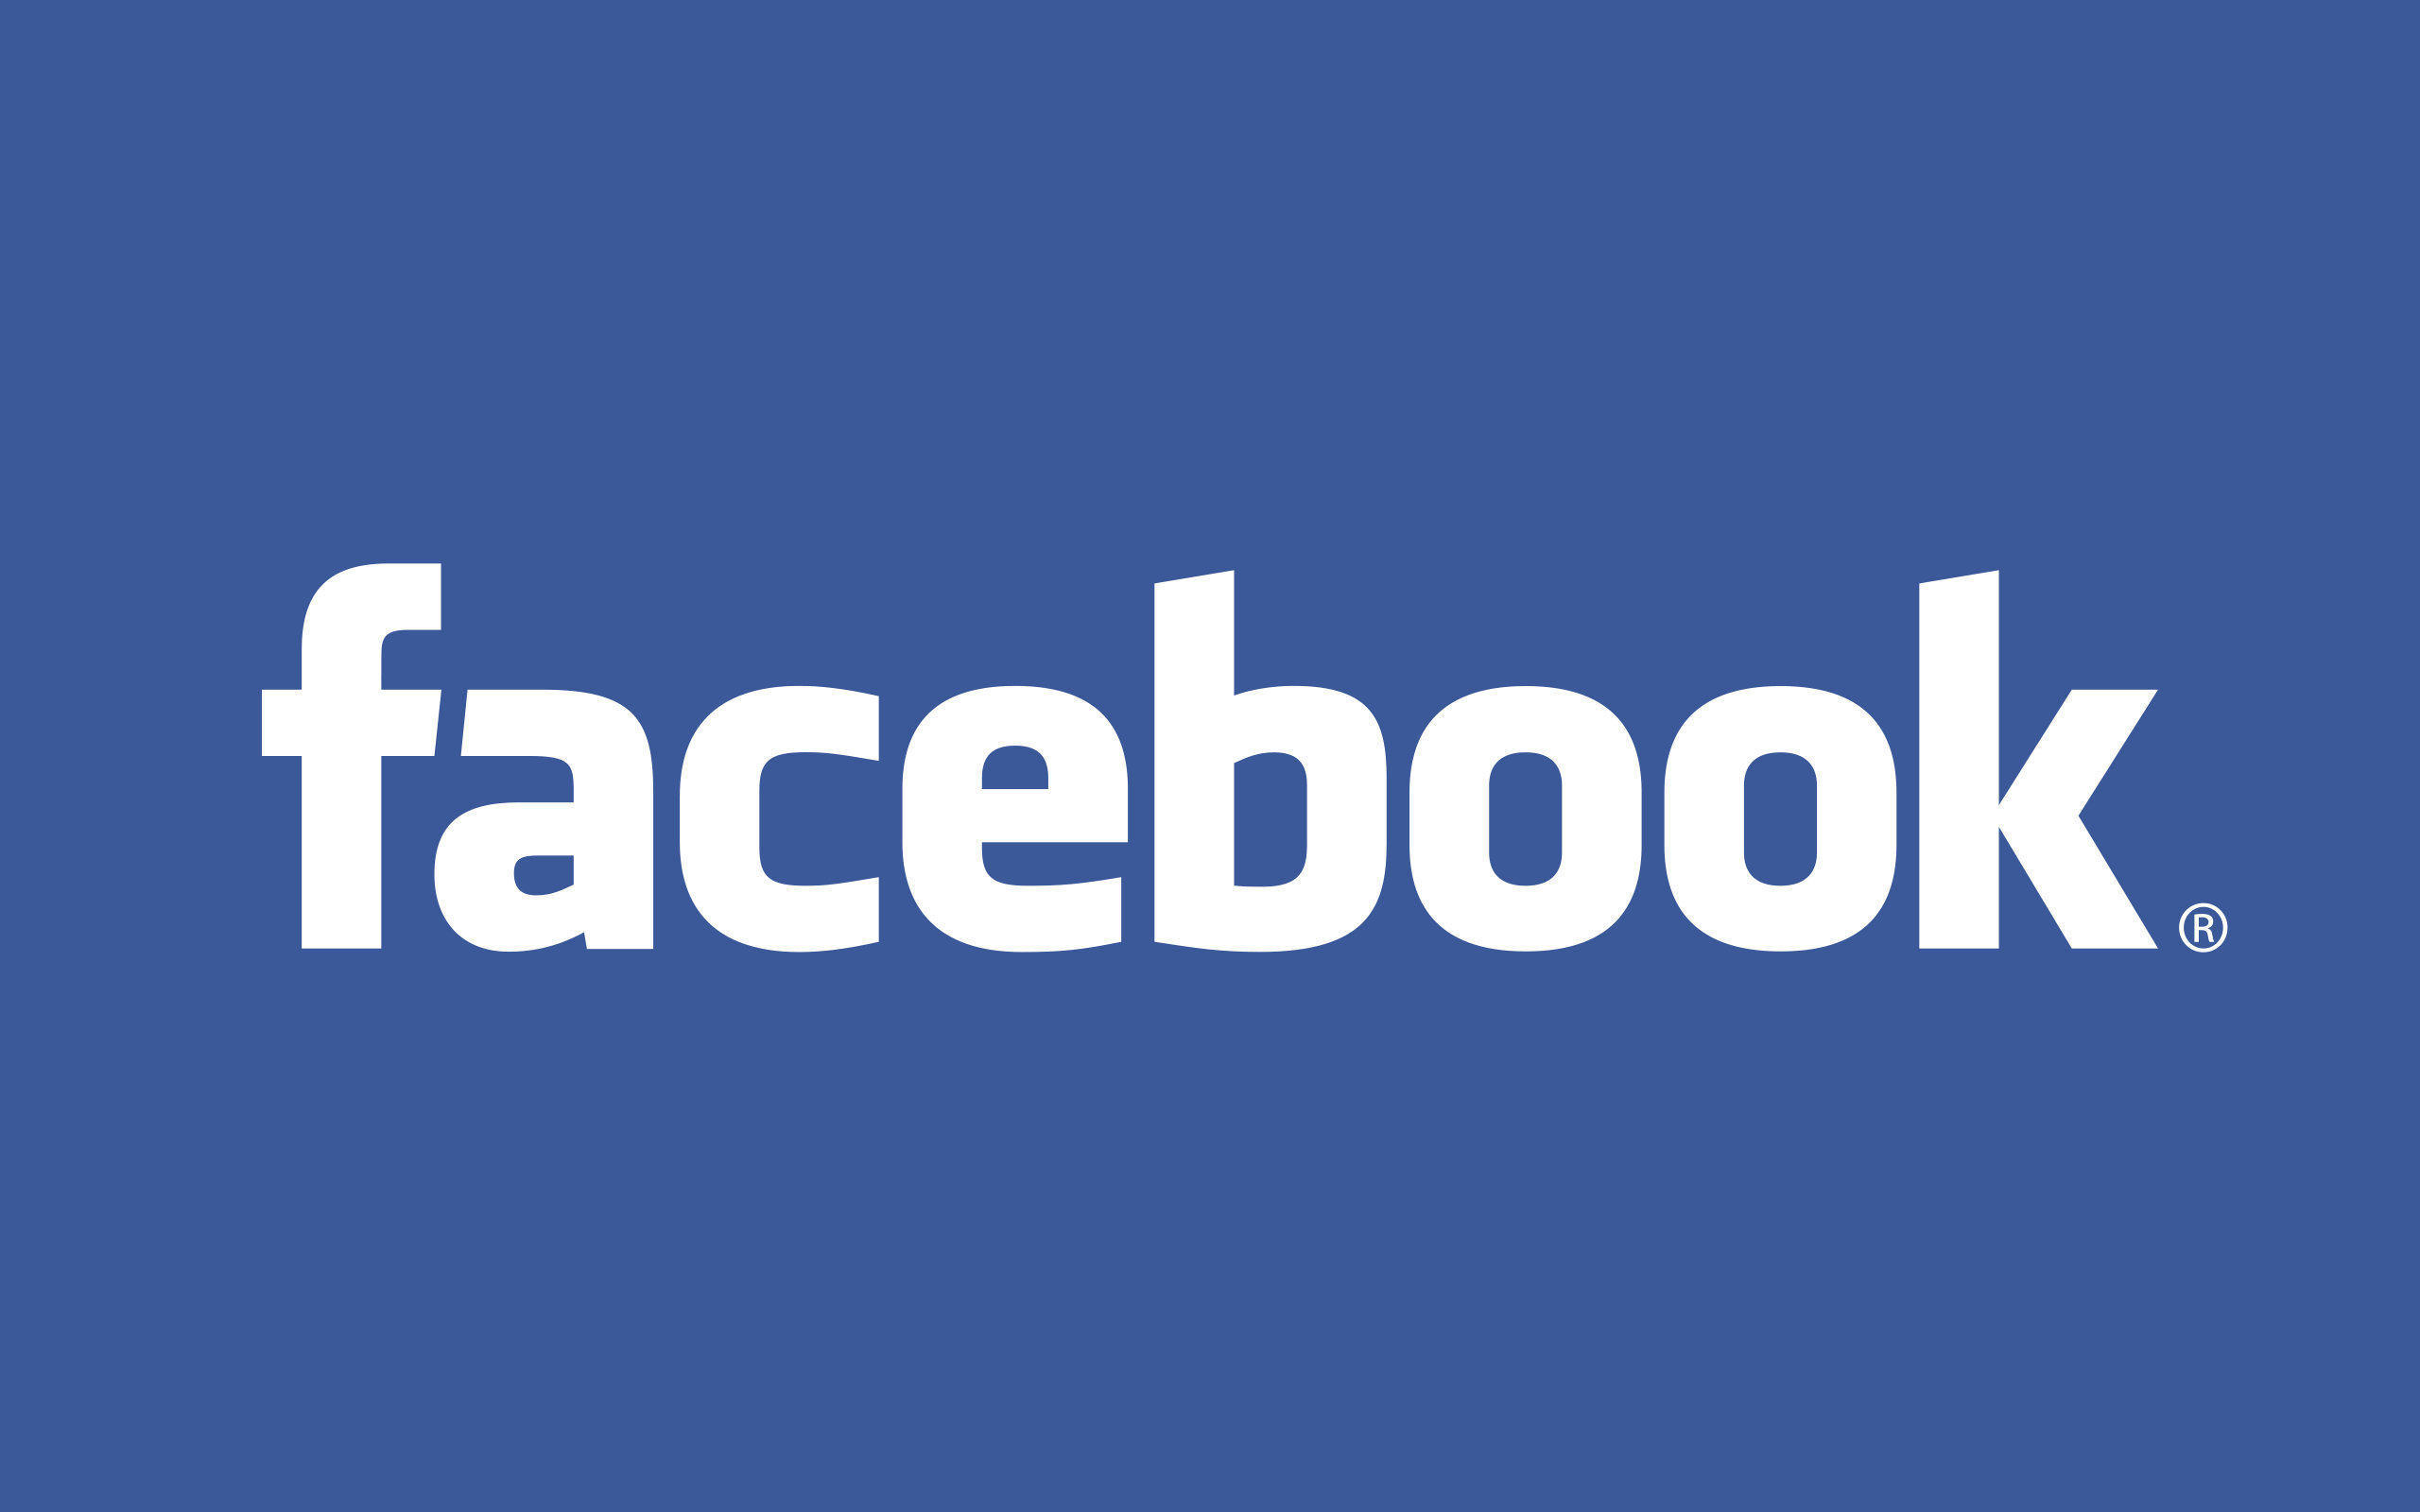 Pictures For Facebook - Facebook Logo 2017 - HD Wallpaper 